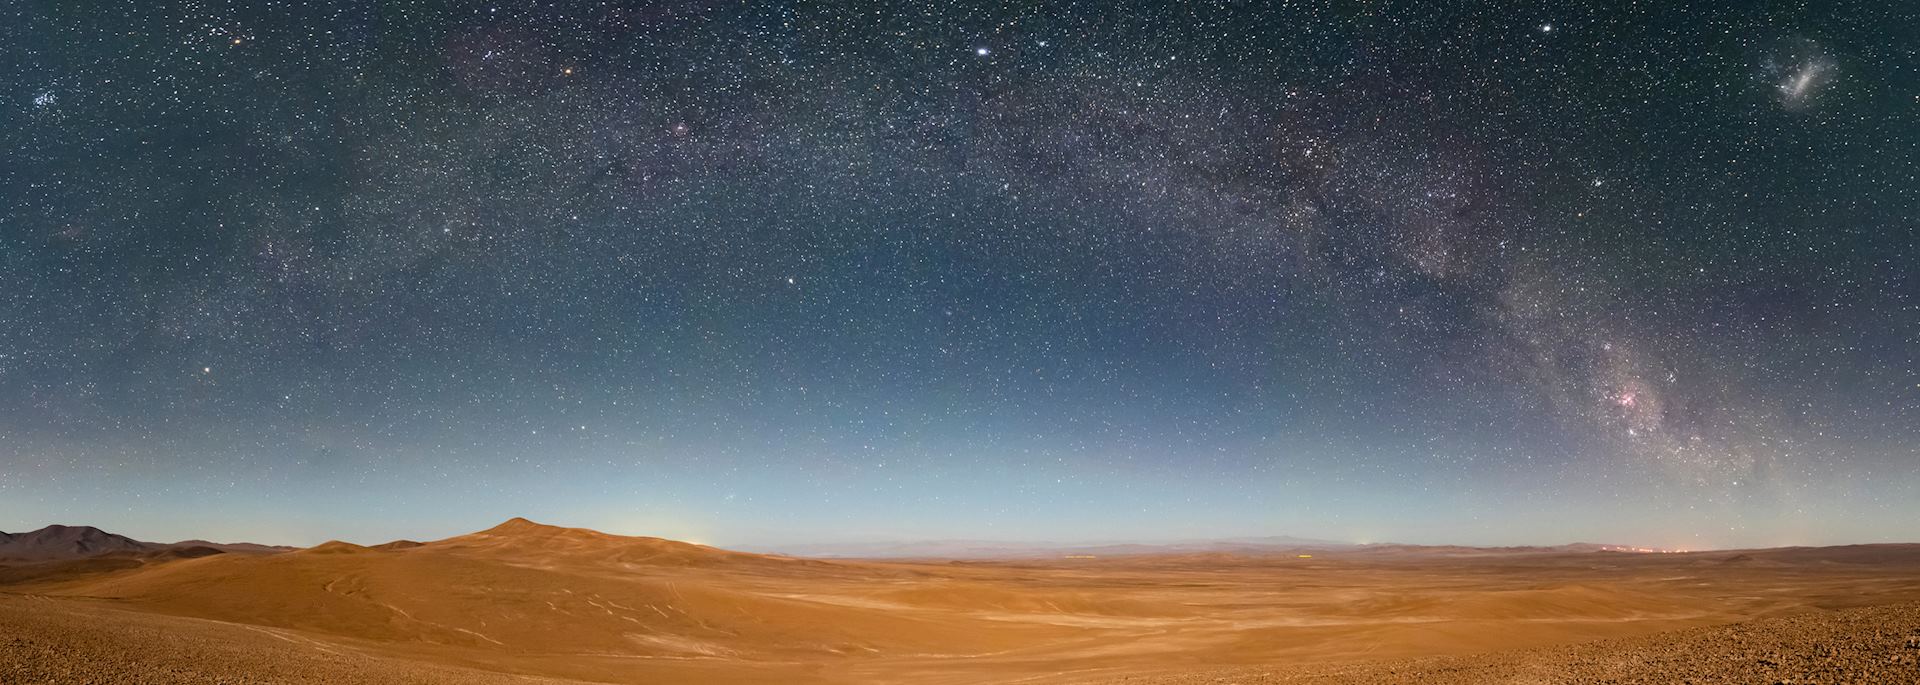 View of the Milky Way from the Atacama Desert